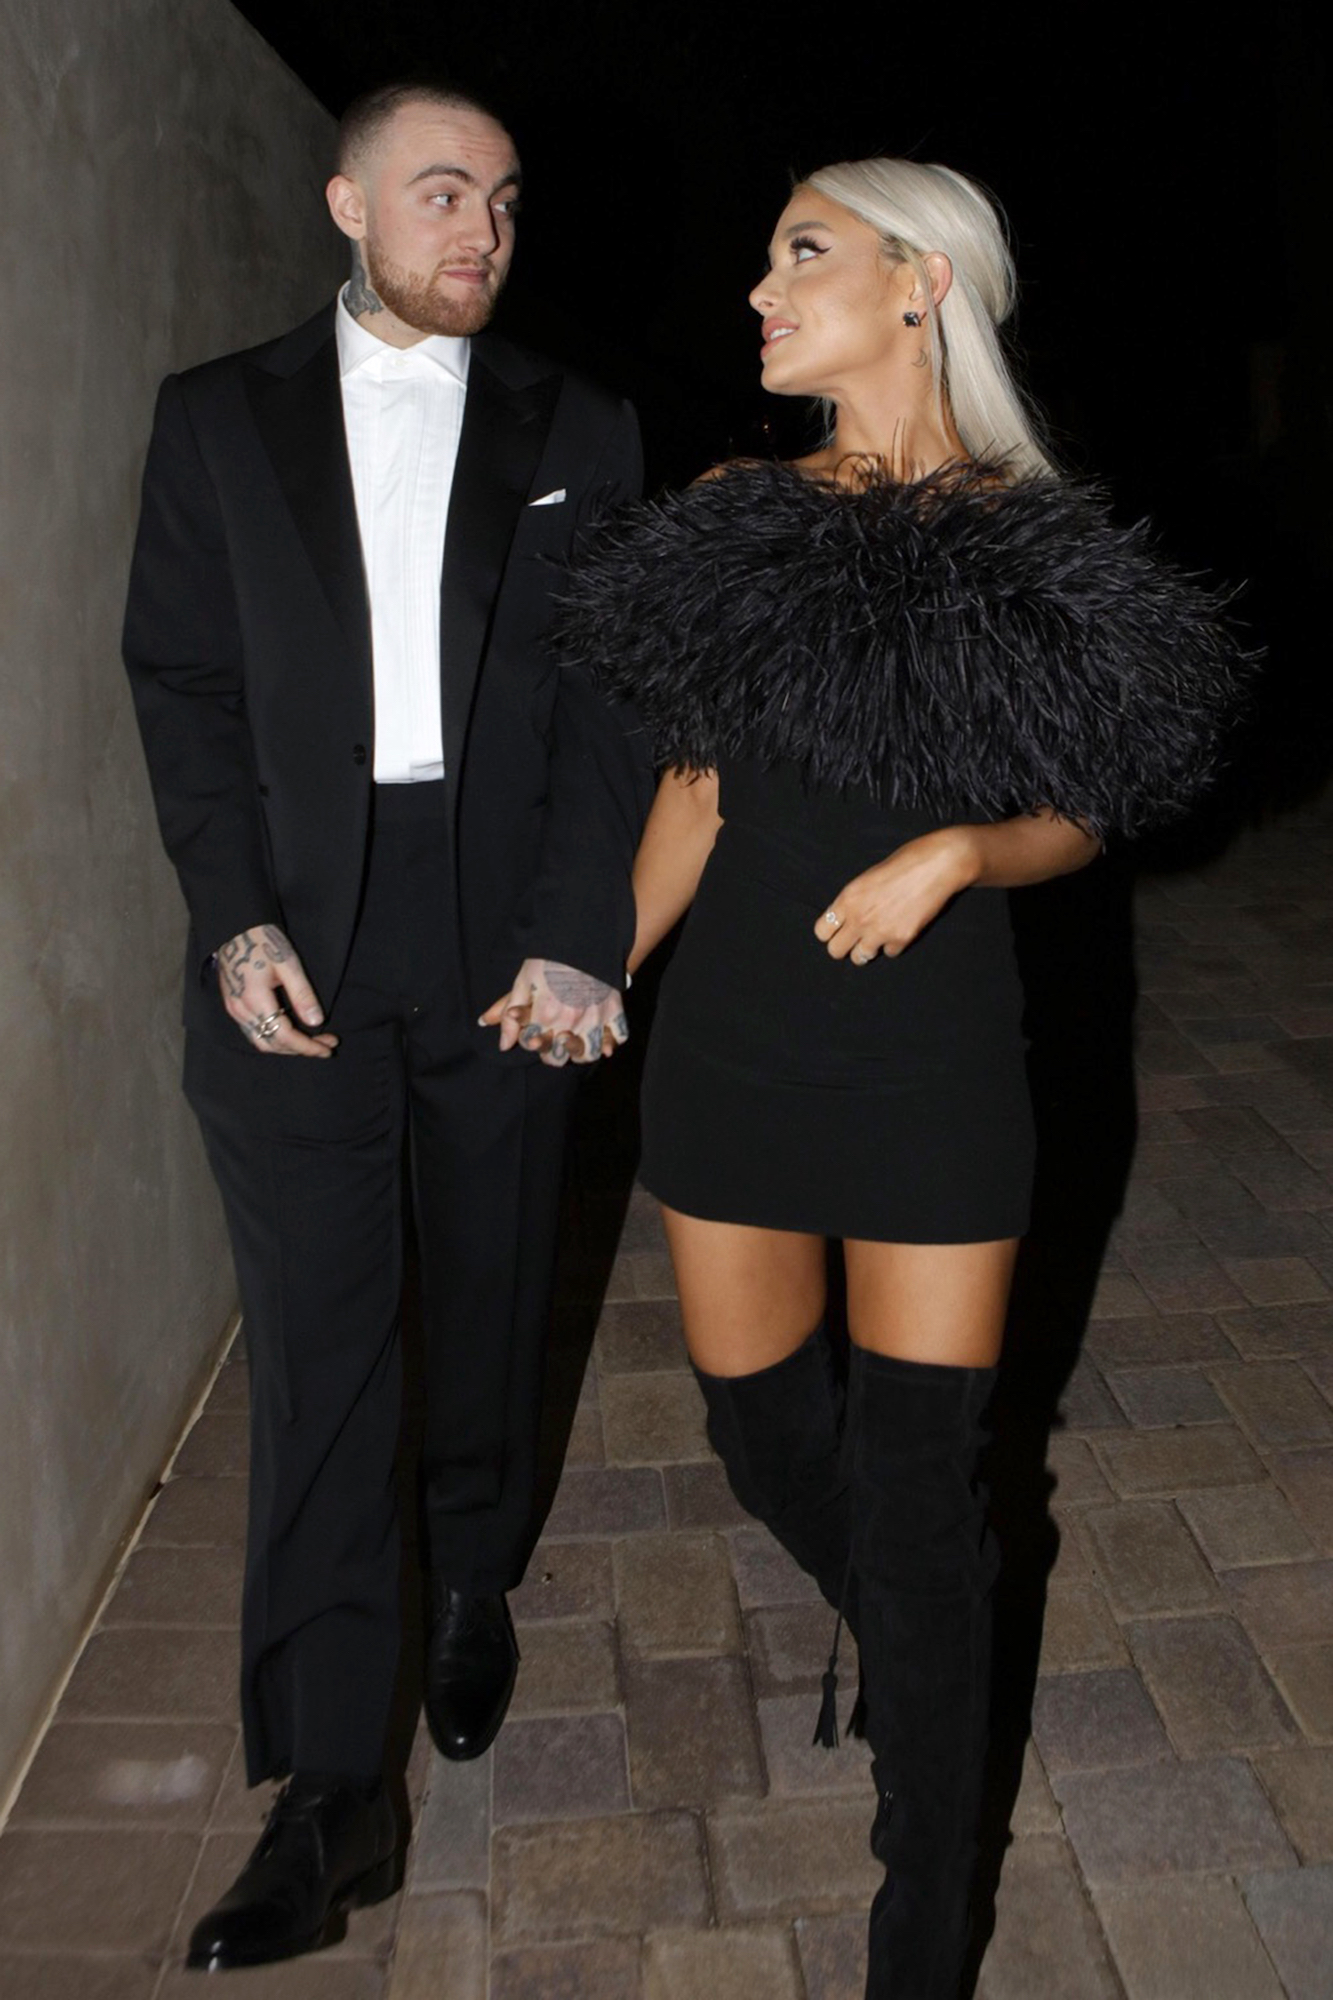 Mac Miller and Ariana Grande